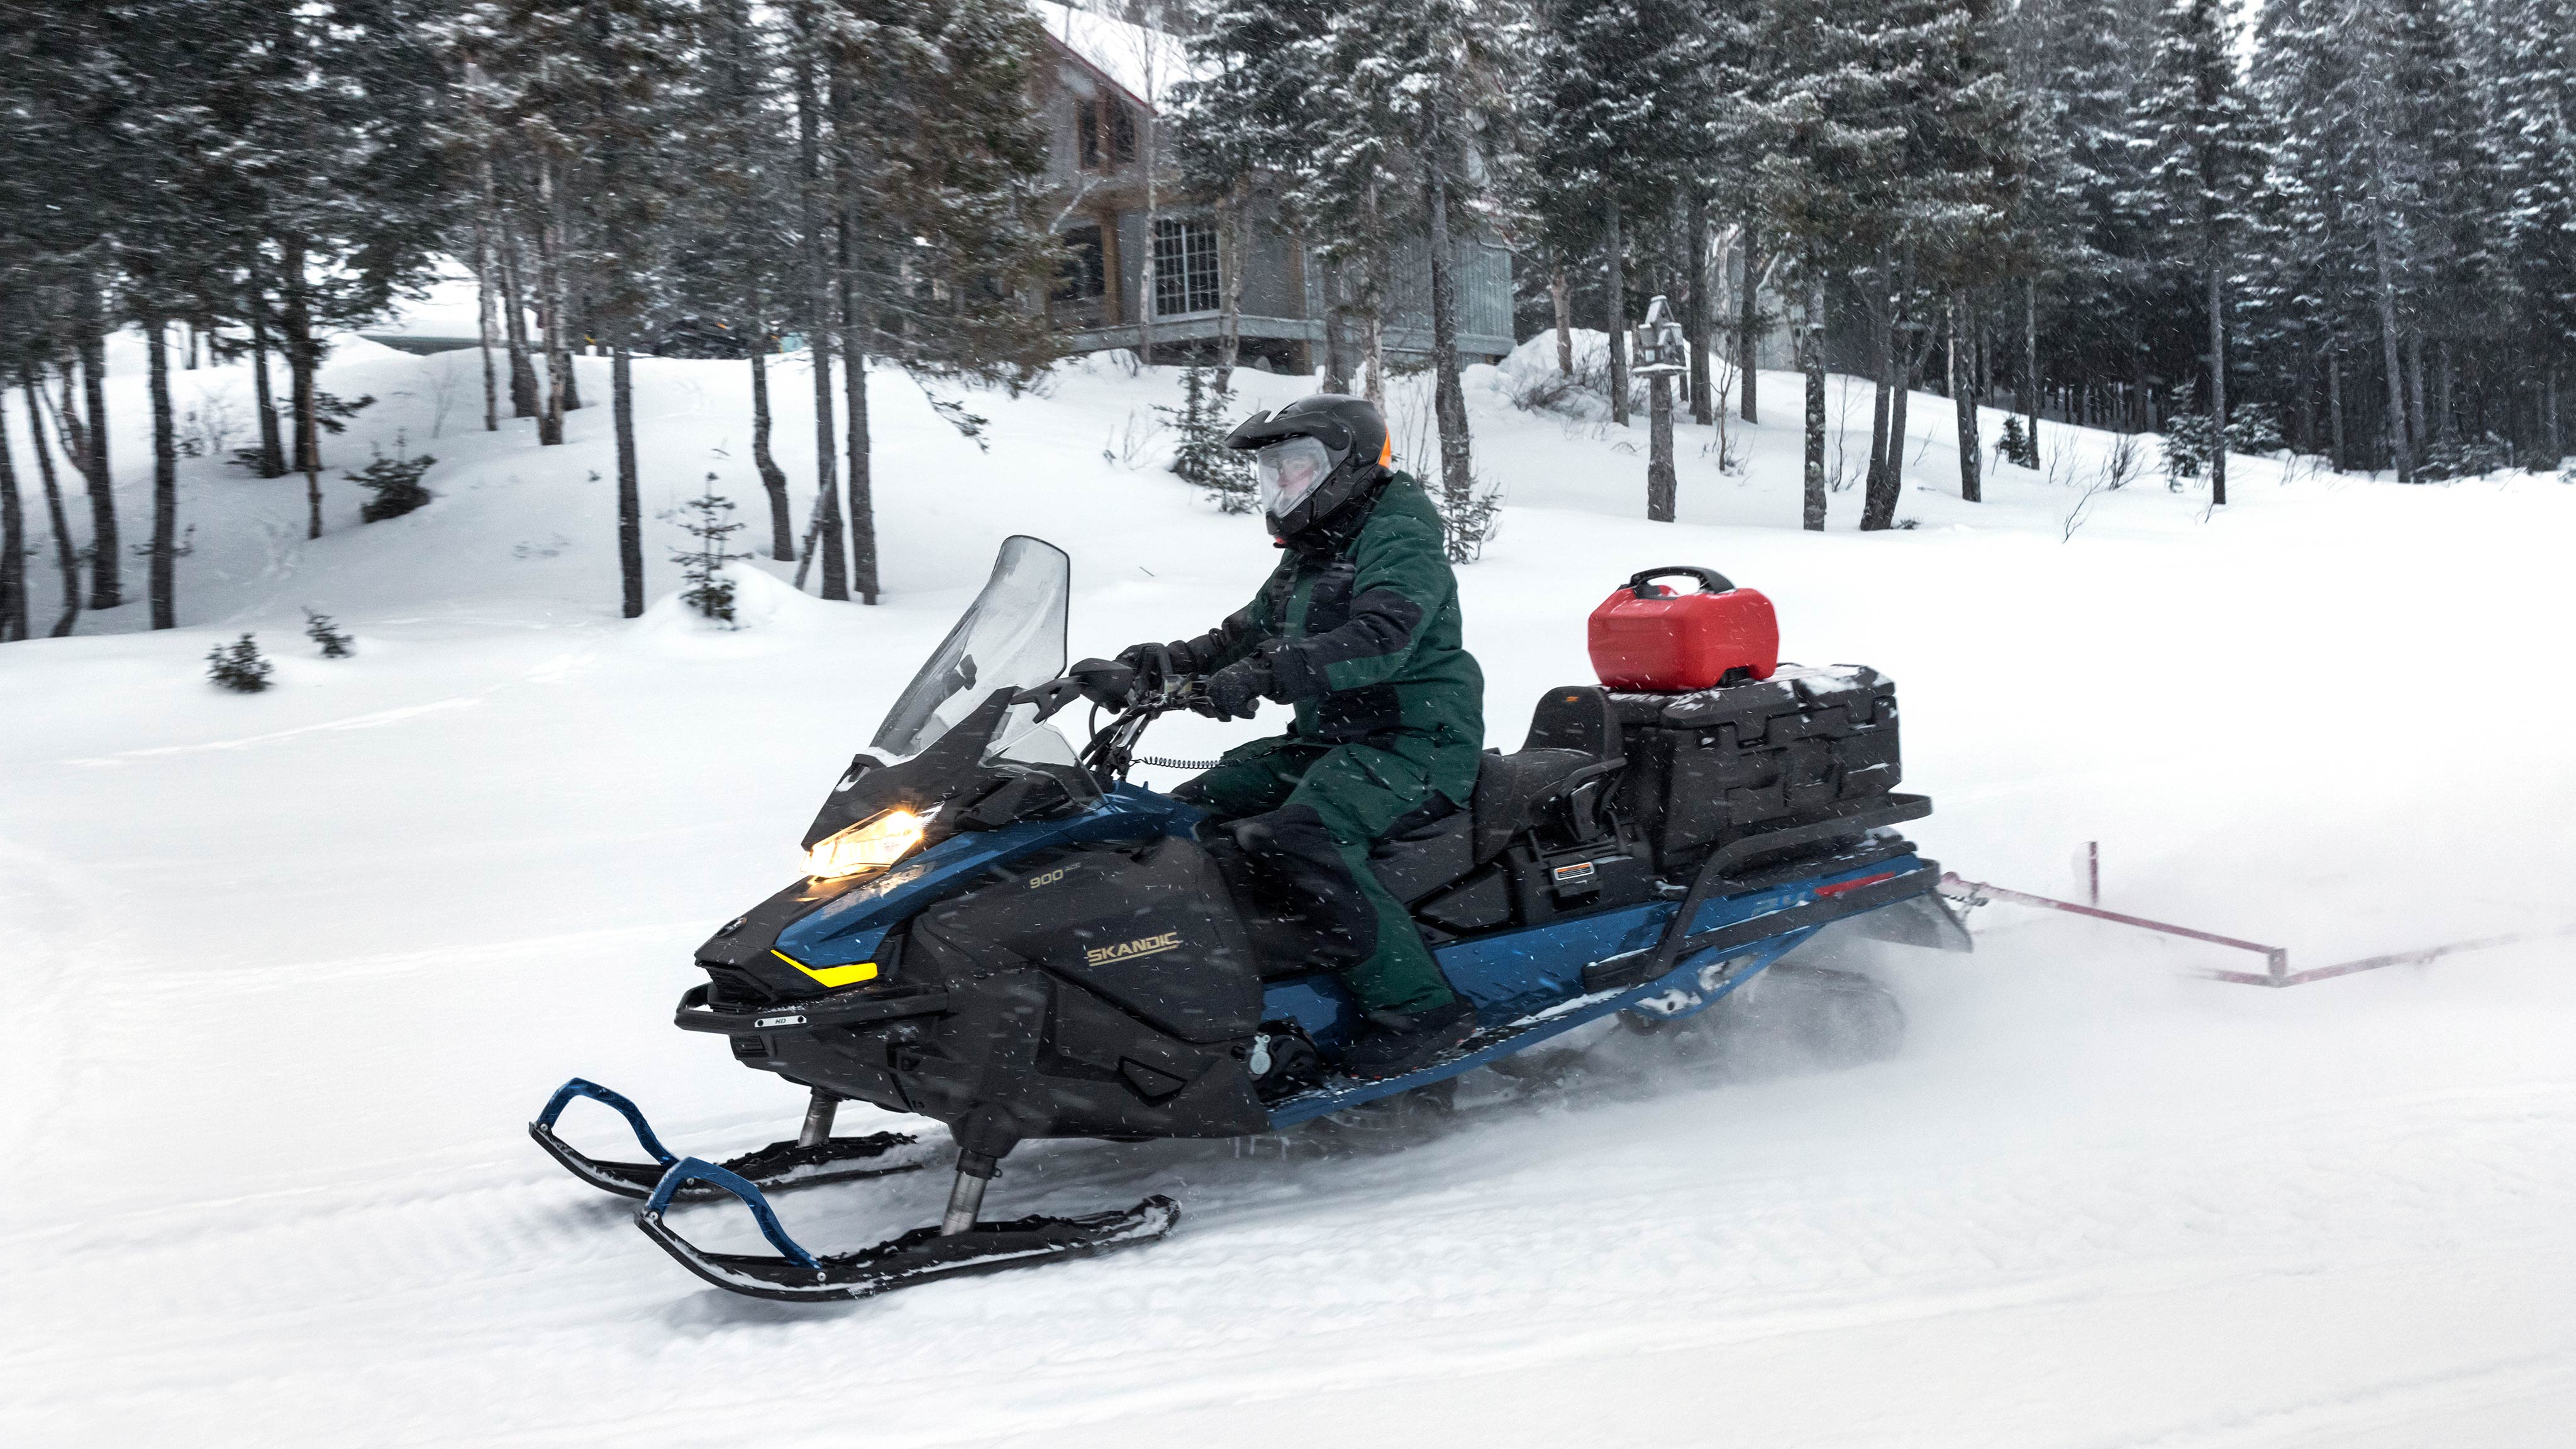 2025 Ski-Doo Skandic sport utility snowmobile riding in the snow